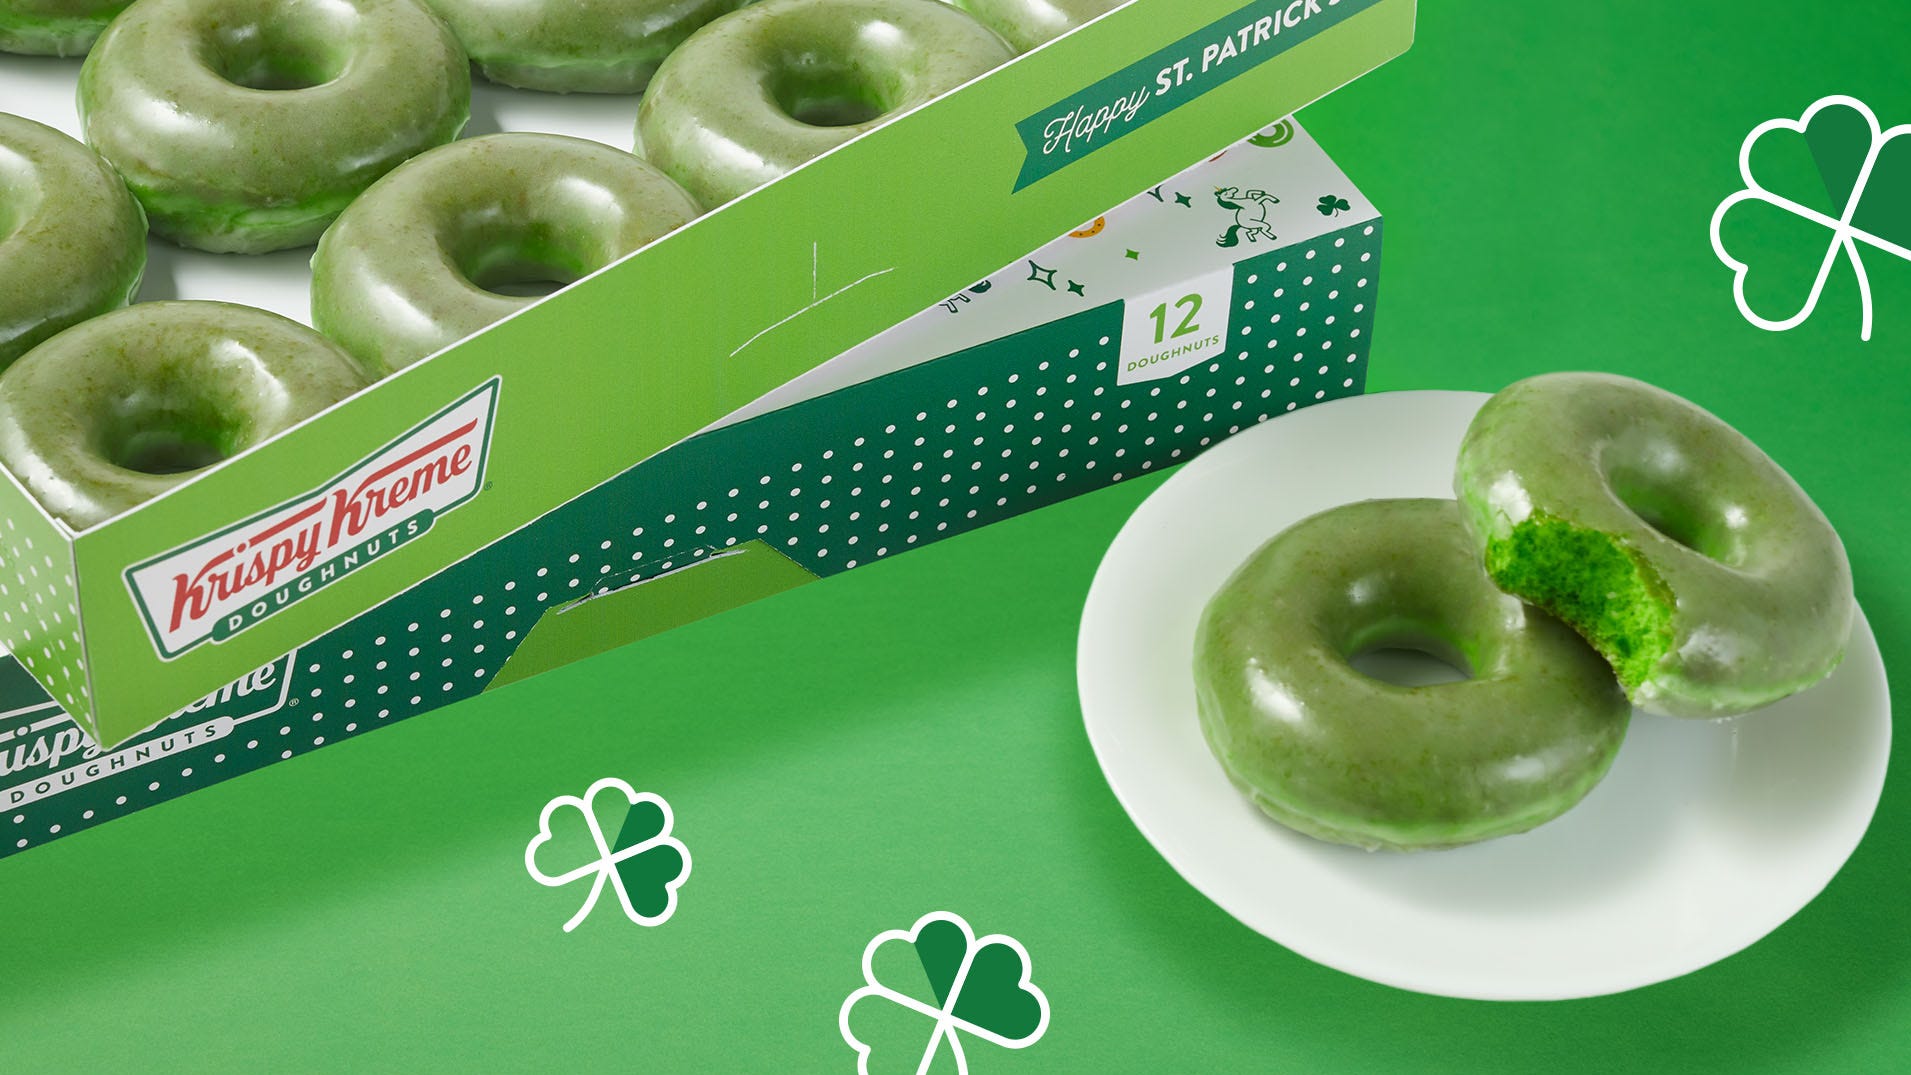 Stimulus Check Free Krispy Kreme Donuts Among St Patrick S Day Deals - roblox fast food bar model